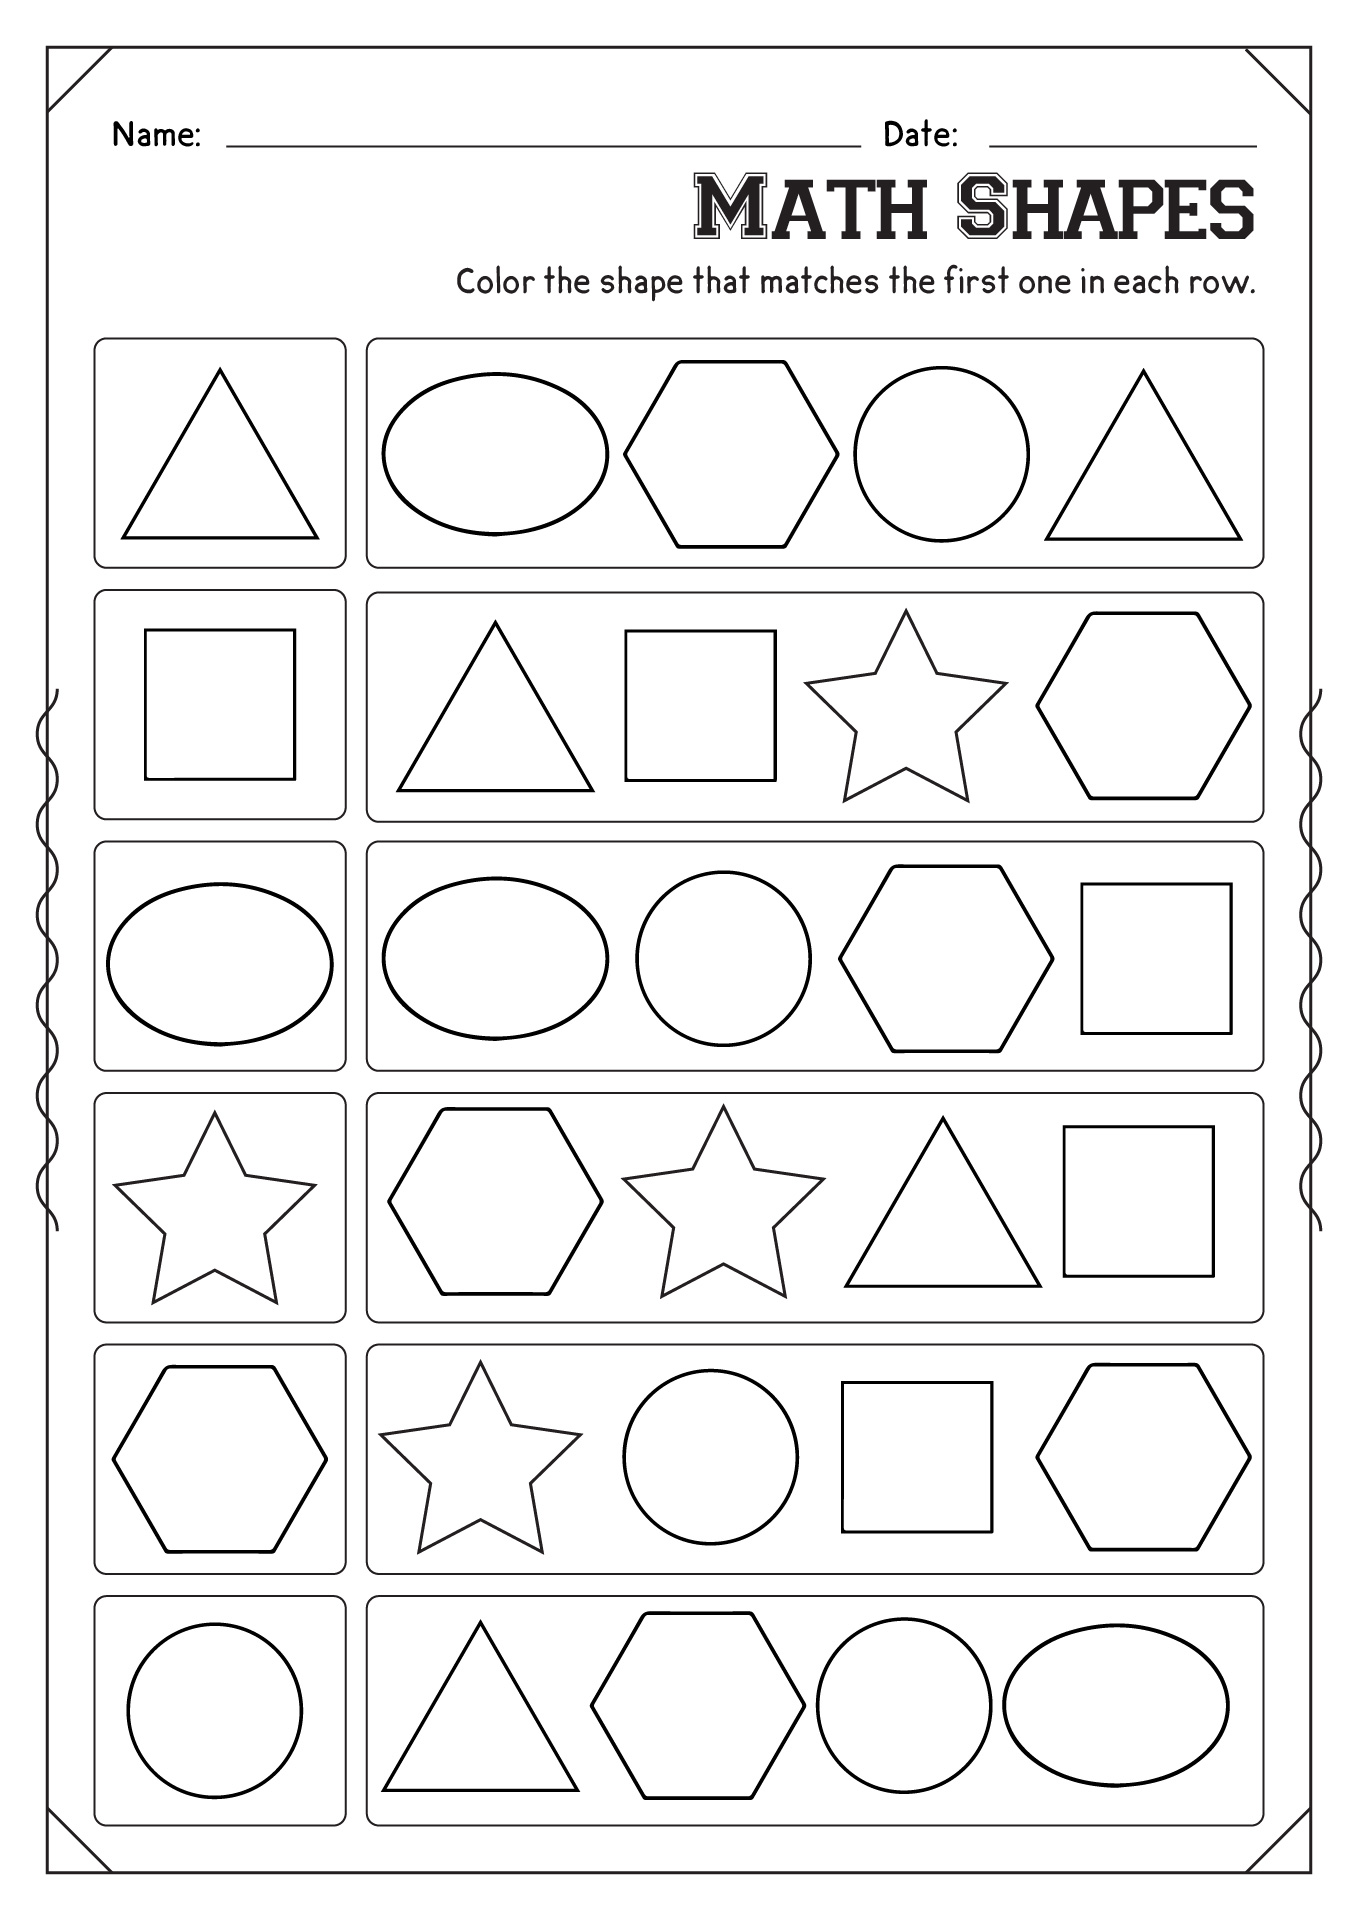 Math Shapes Worksheet Preschool Image